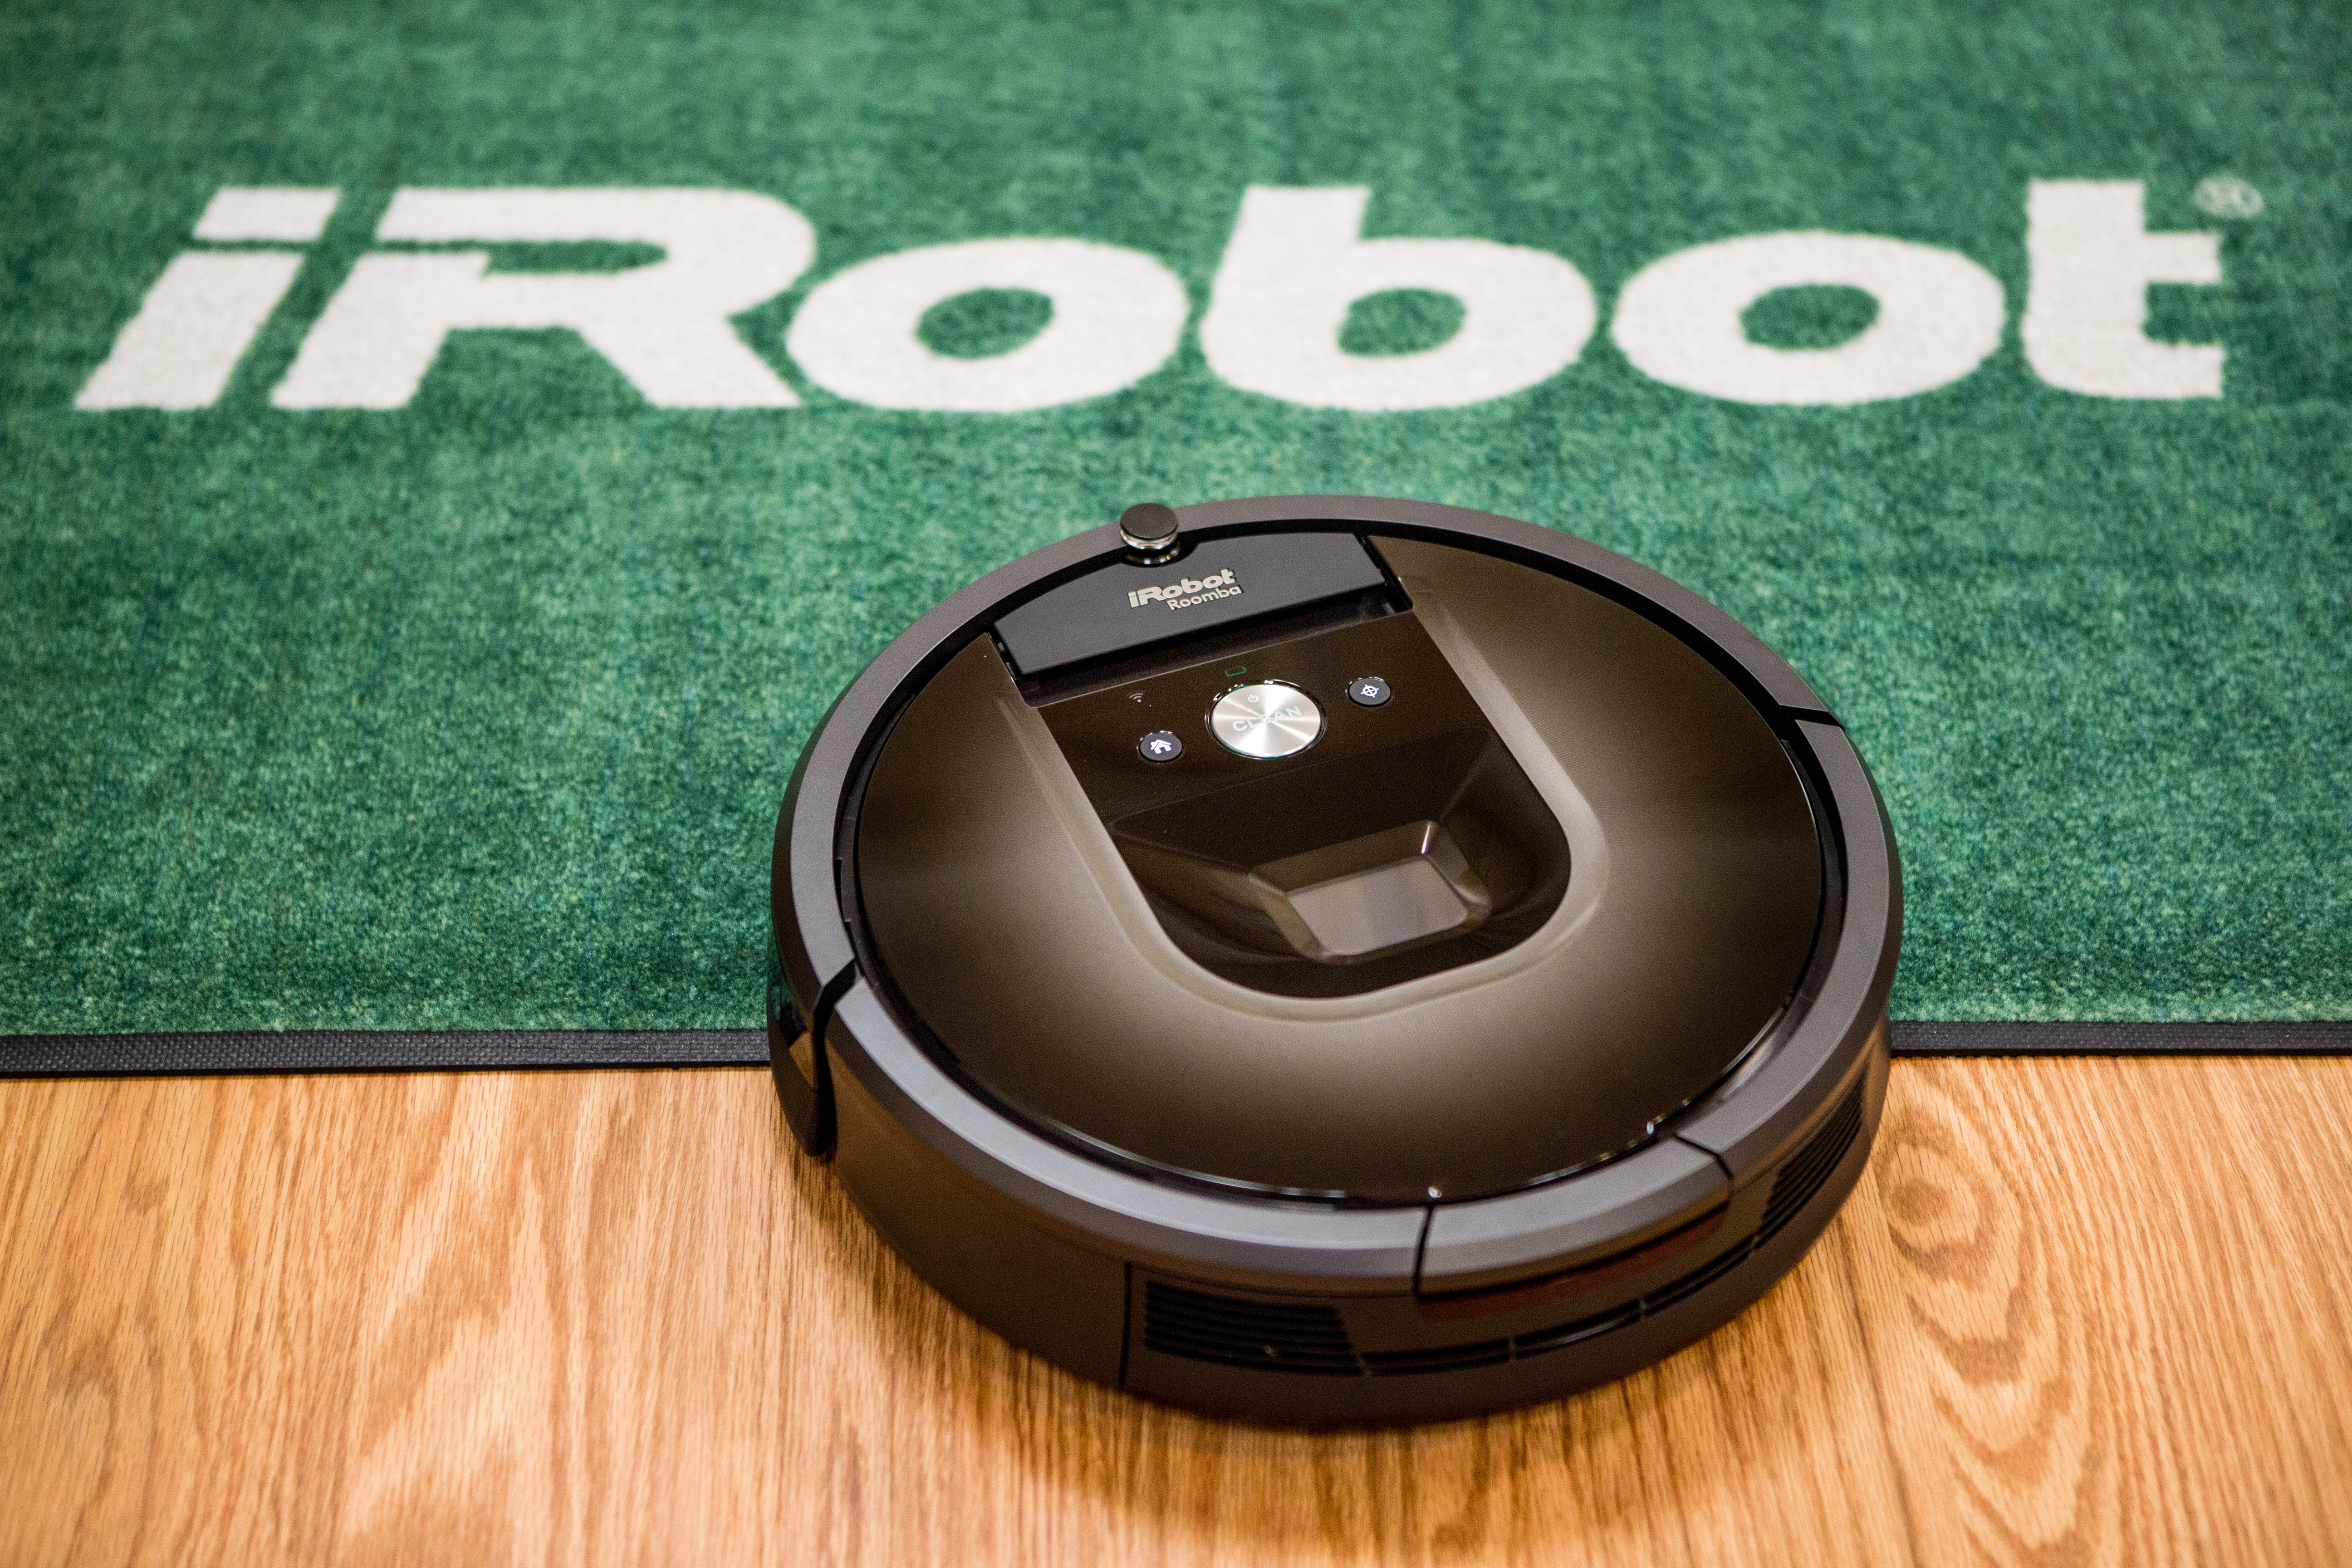 Energize solid Vilje iRobot Roombas its way into Amazon's arms - The Boston Globe